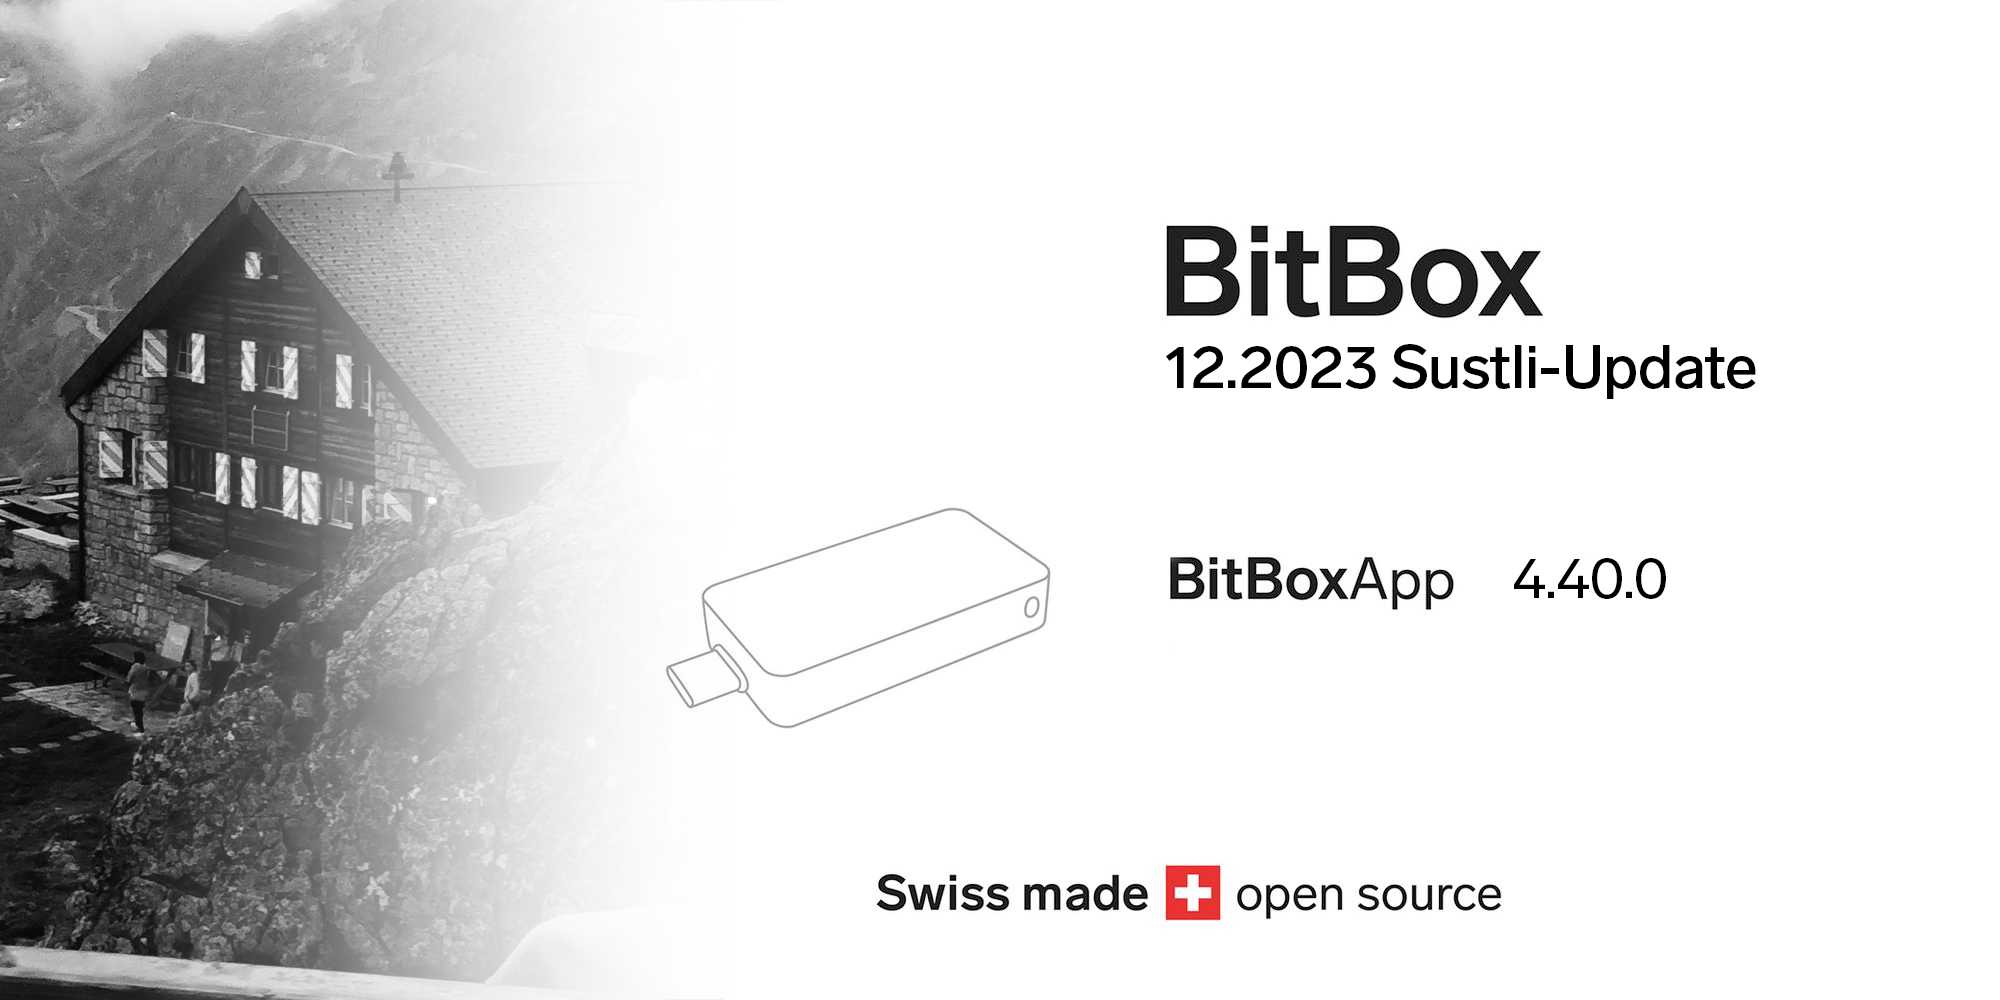 BitBox 12.2023 Sustli-Update